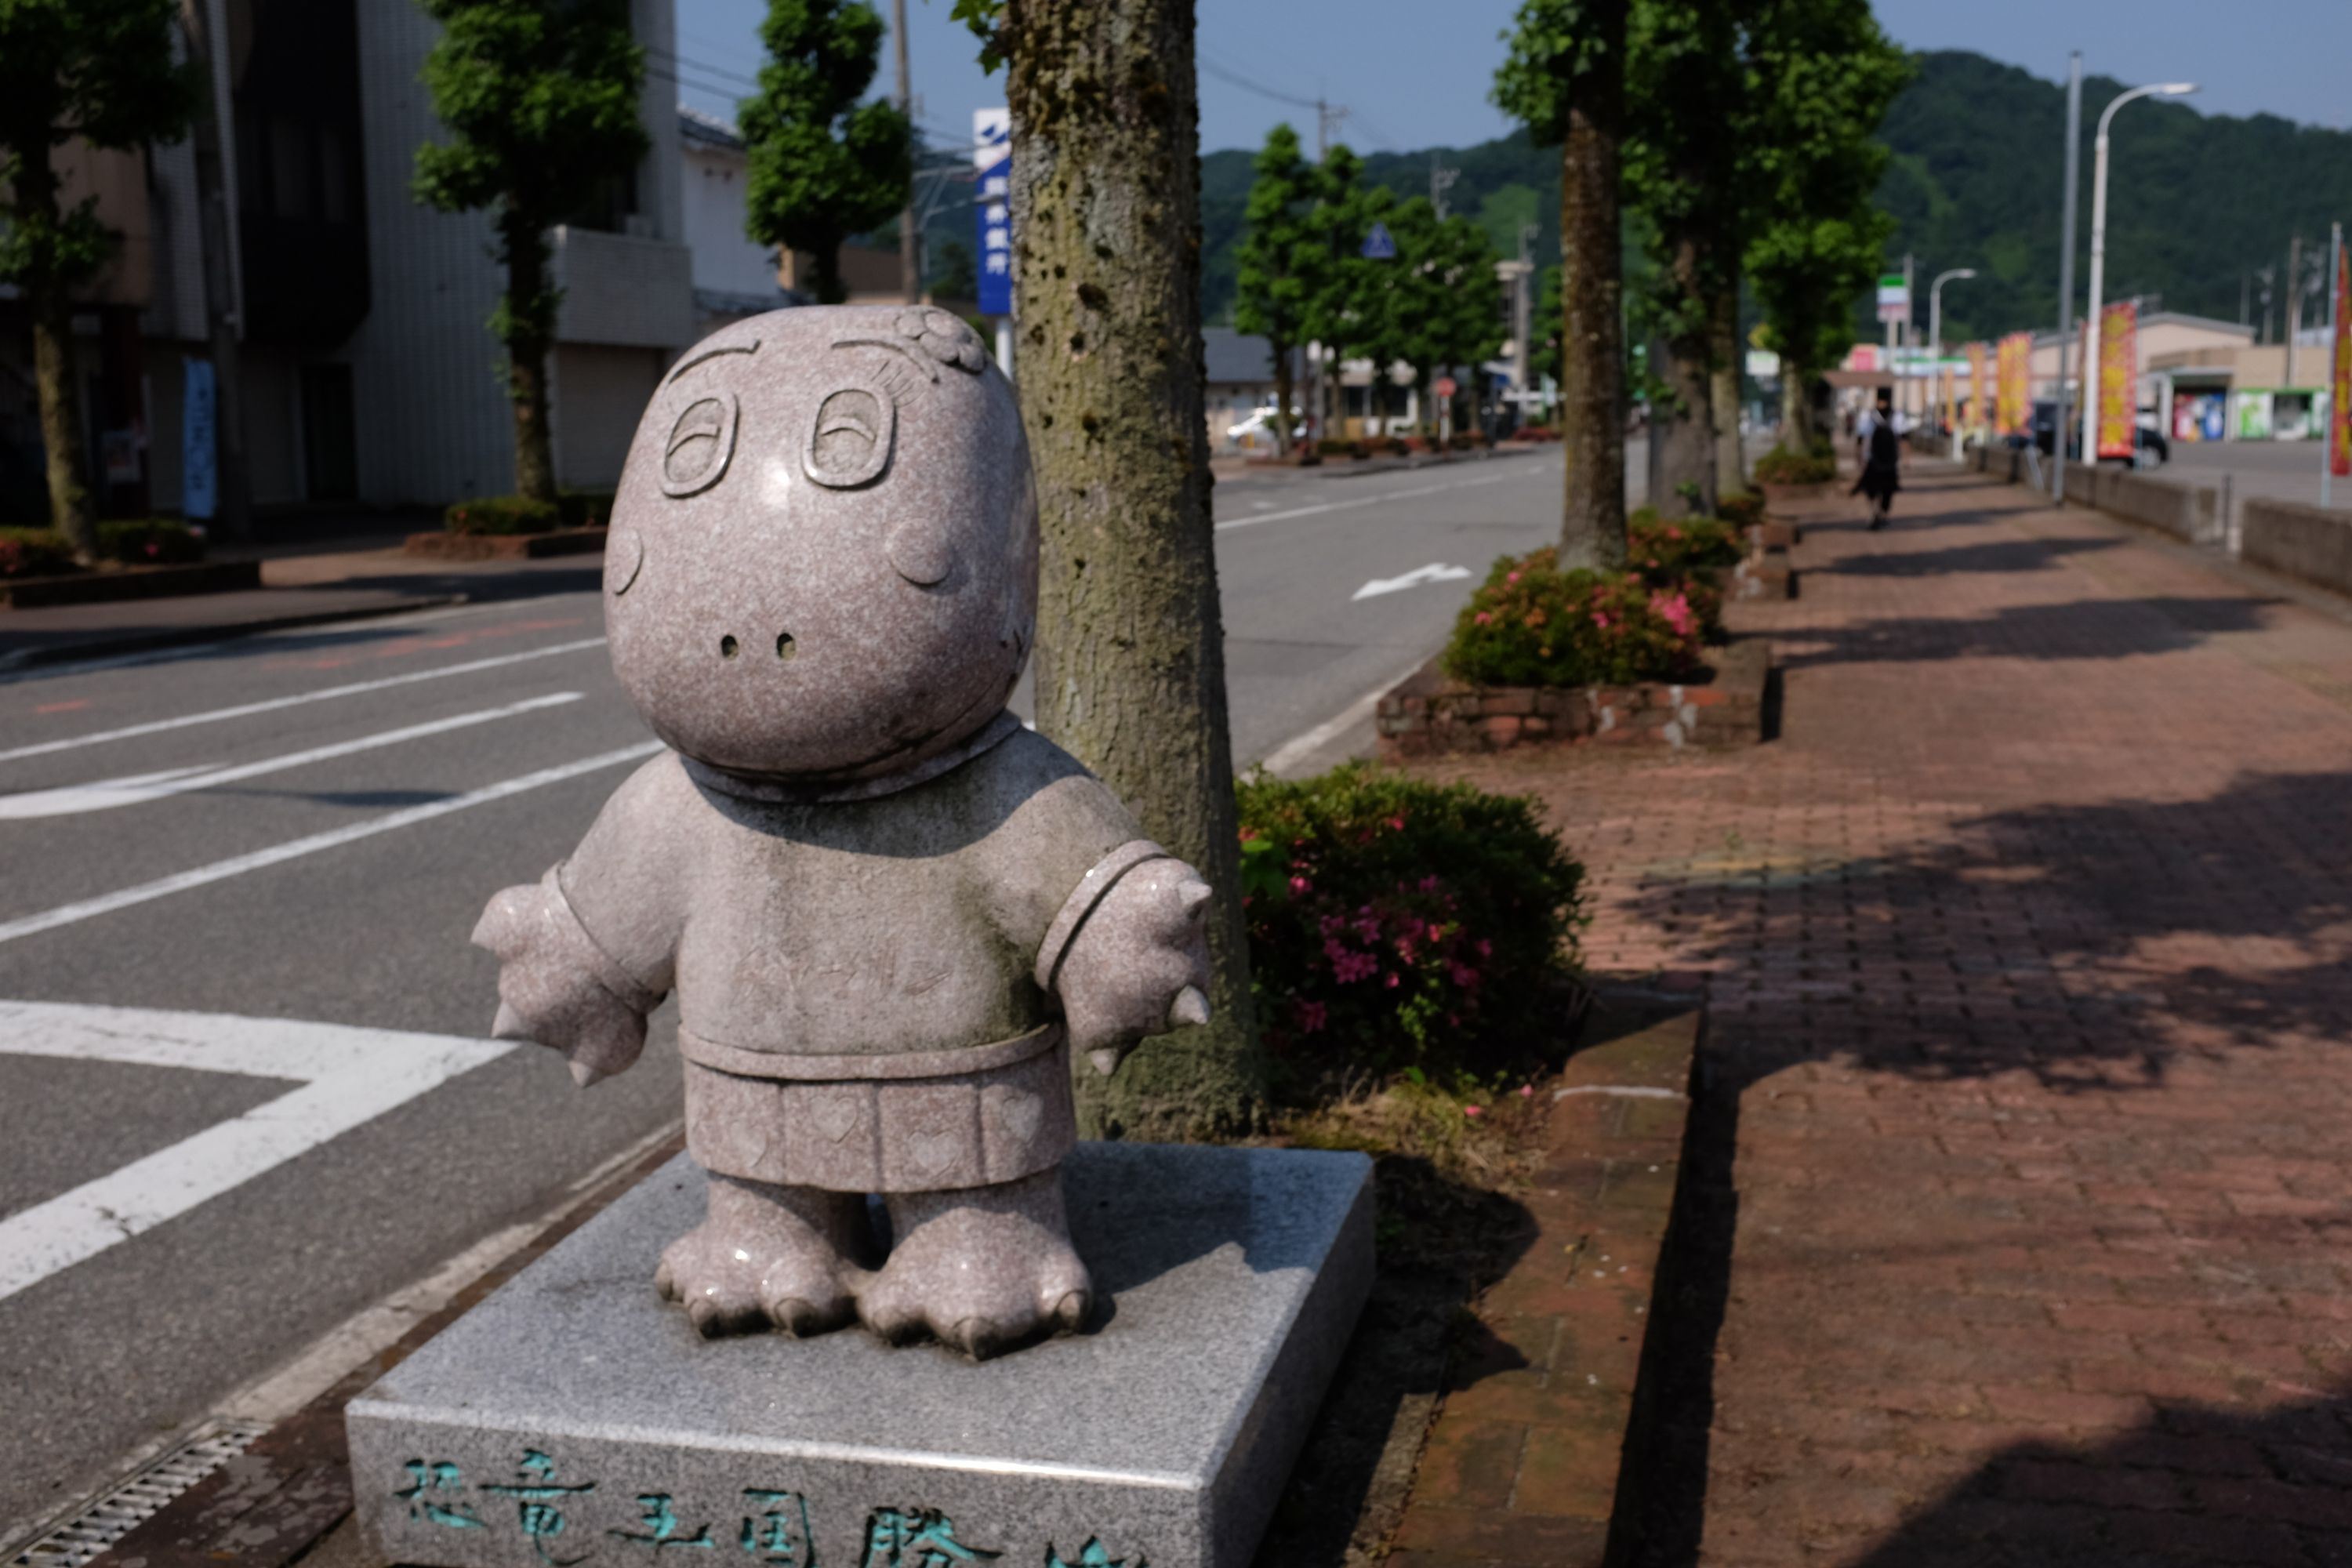 Stone statue of a cartoon-like dinosaur on a sunlit street.